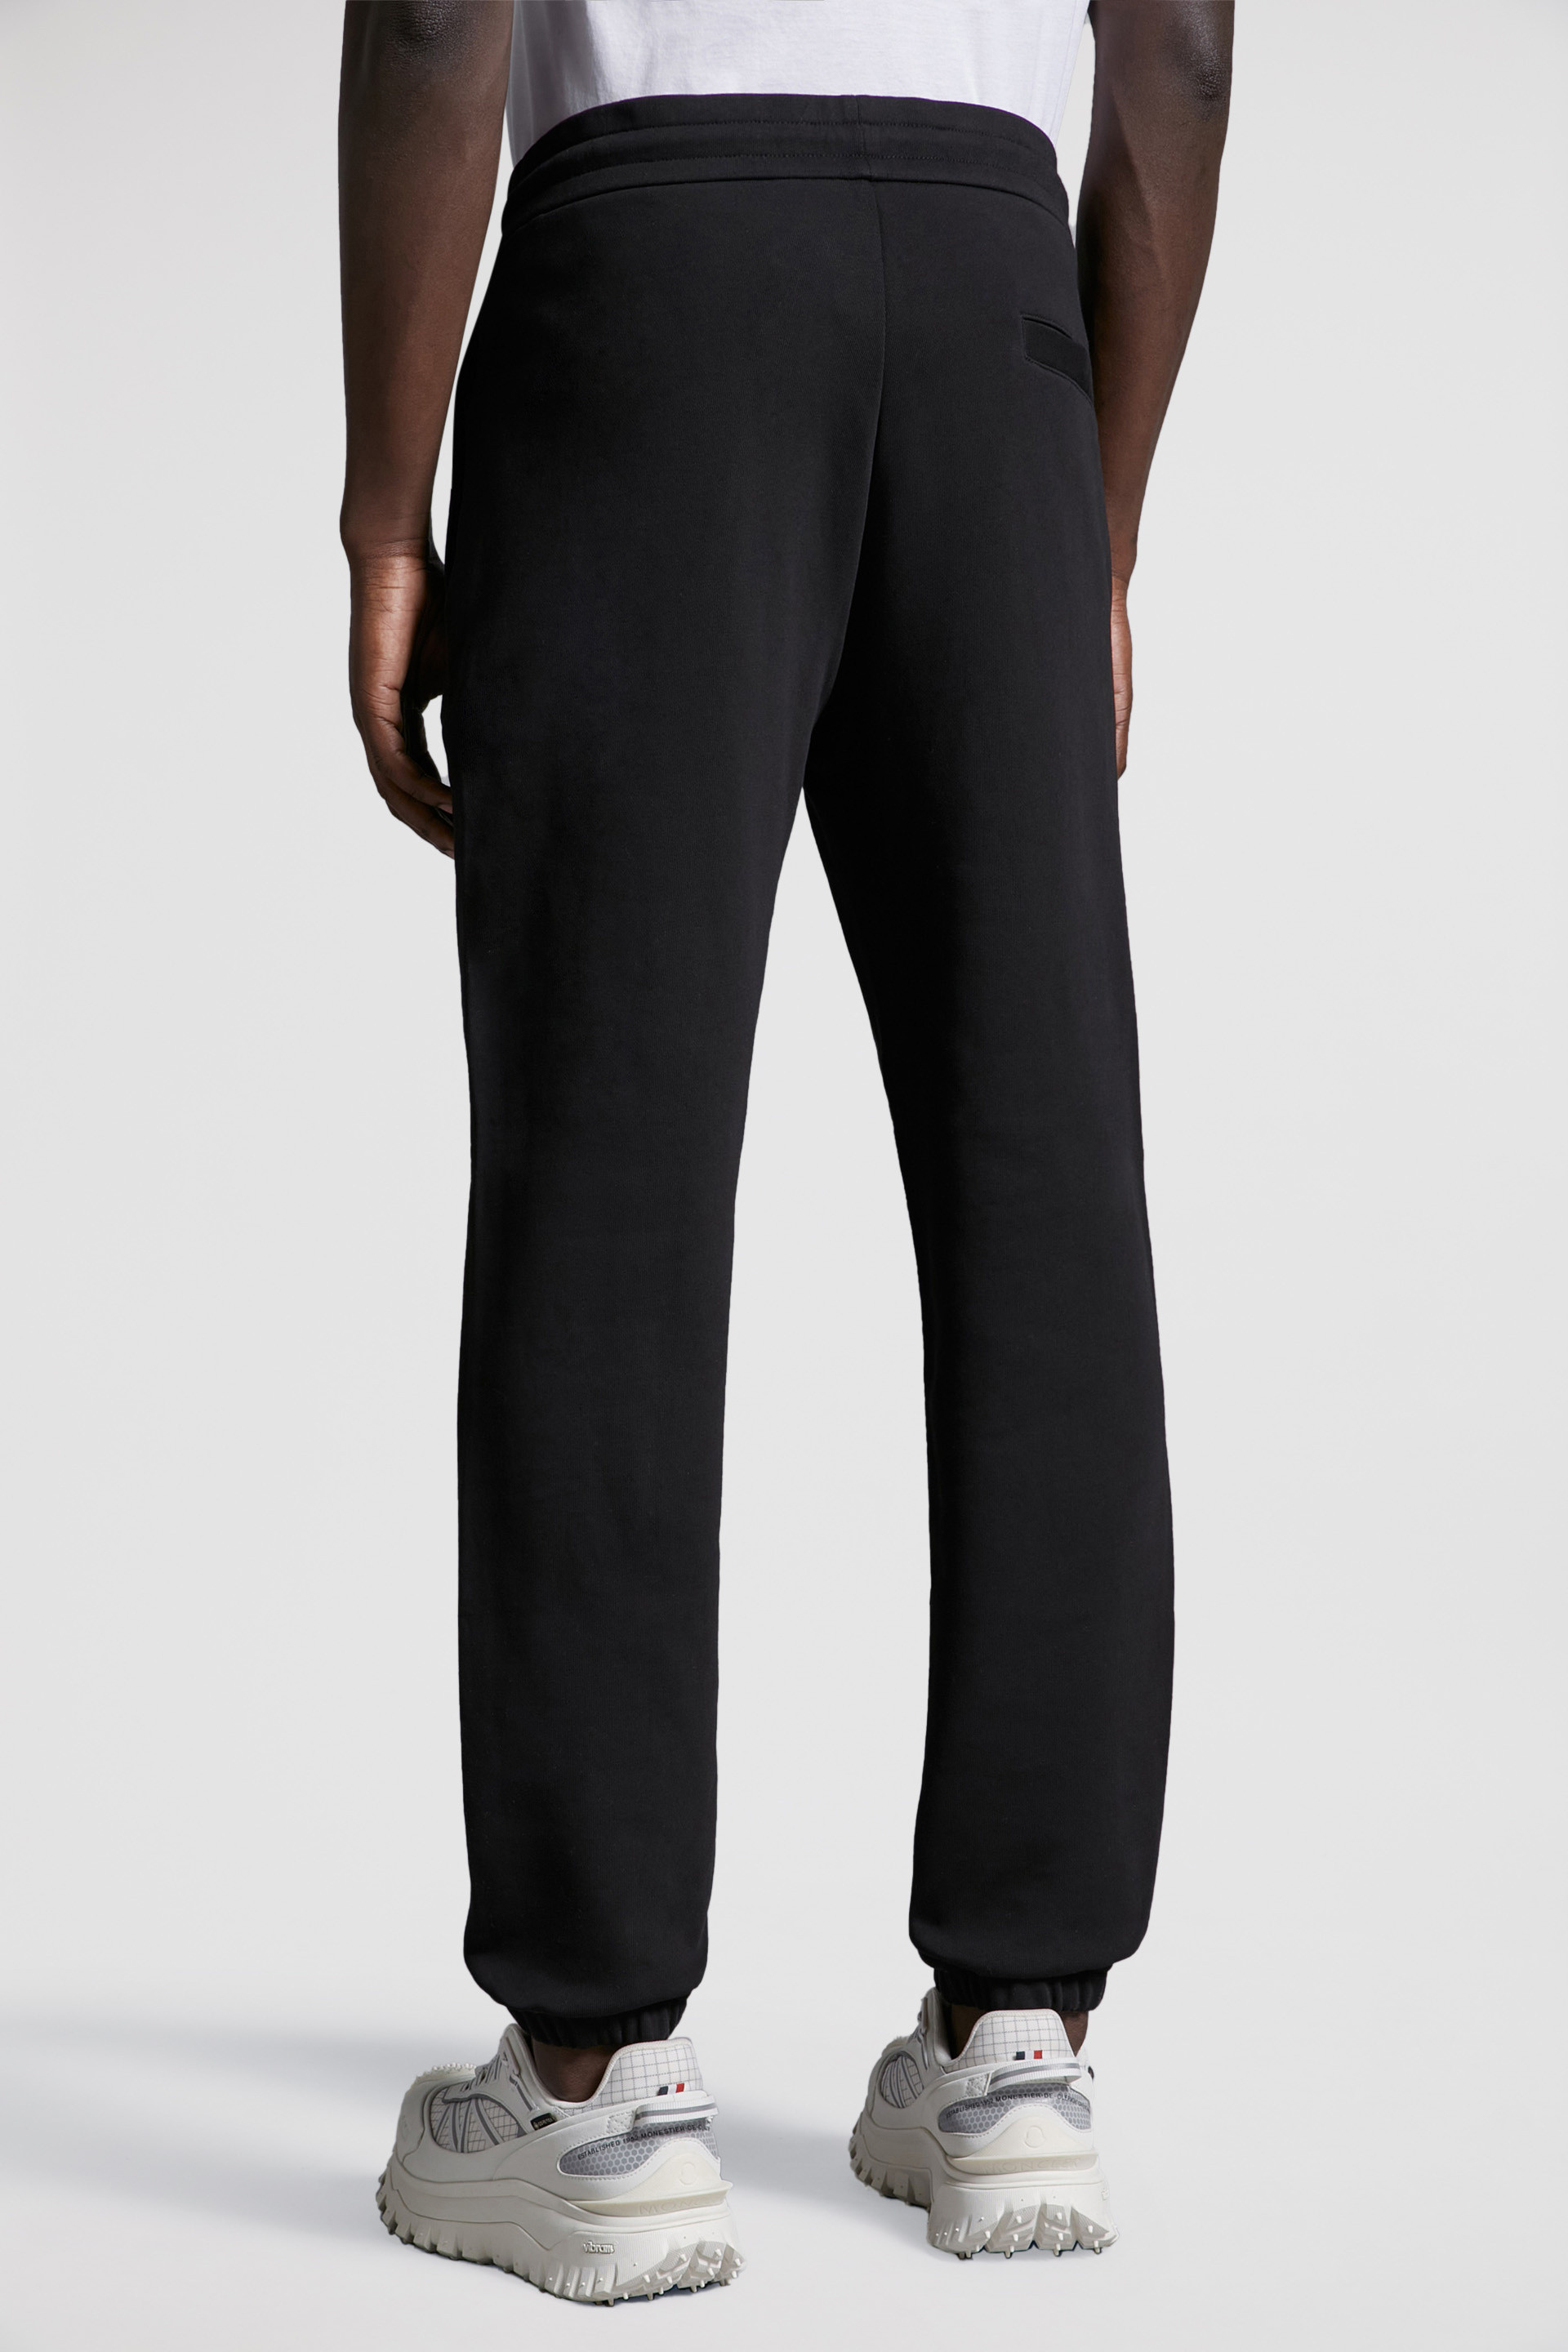 Moncler Ladies Side Stripe Tracksuit Pants in Black, Brand Size 40 (US Size  2) E10931650000-C0006-999 - Apparel - Jomashop